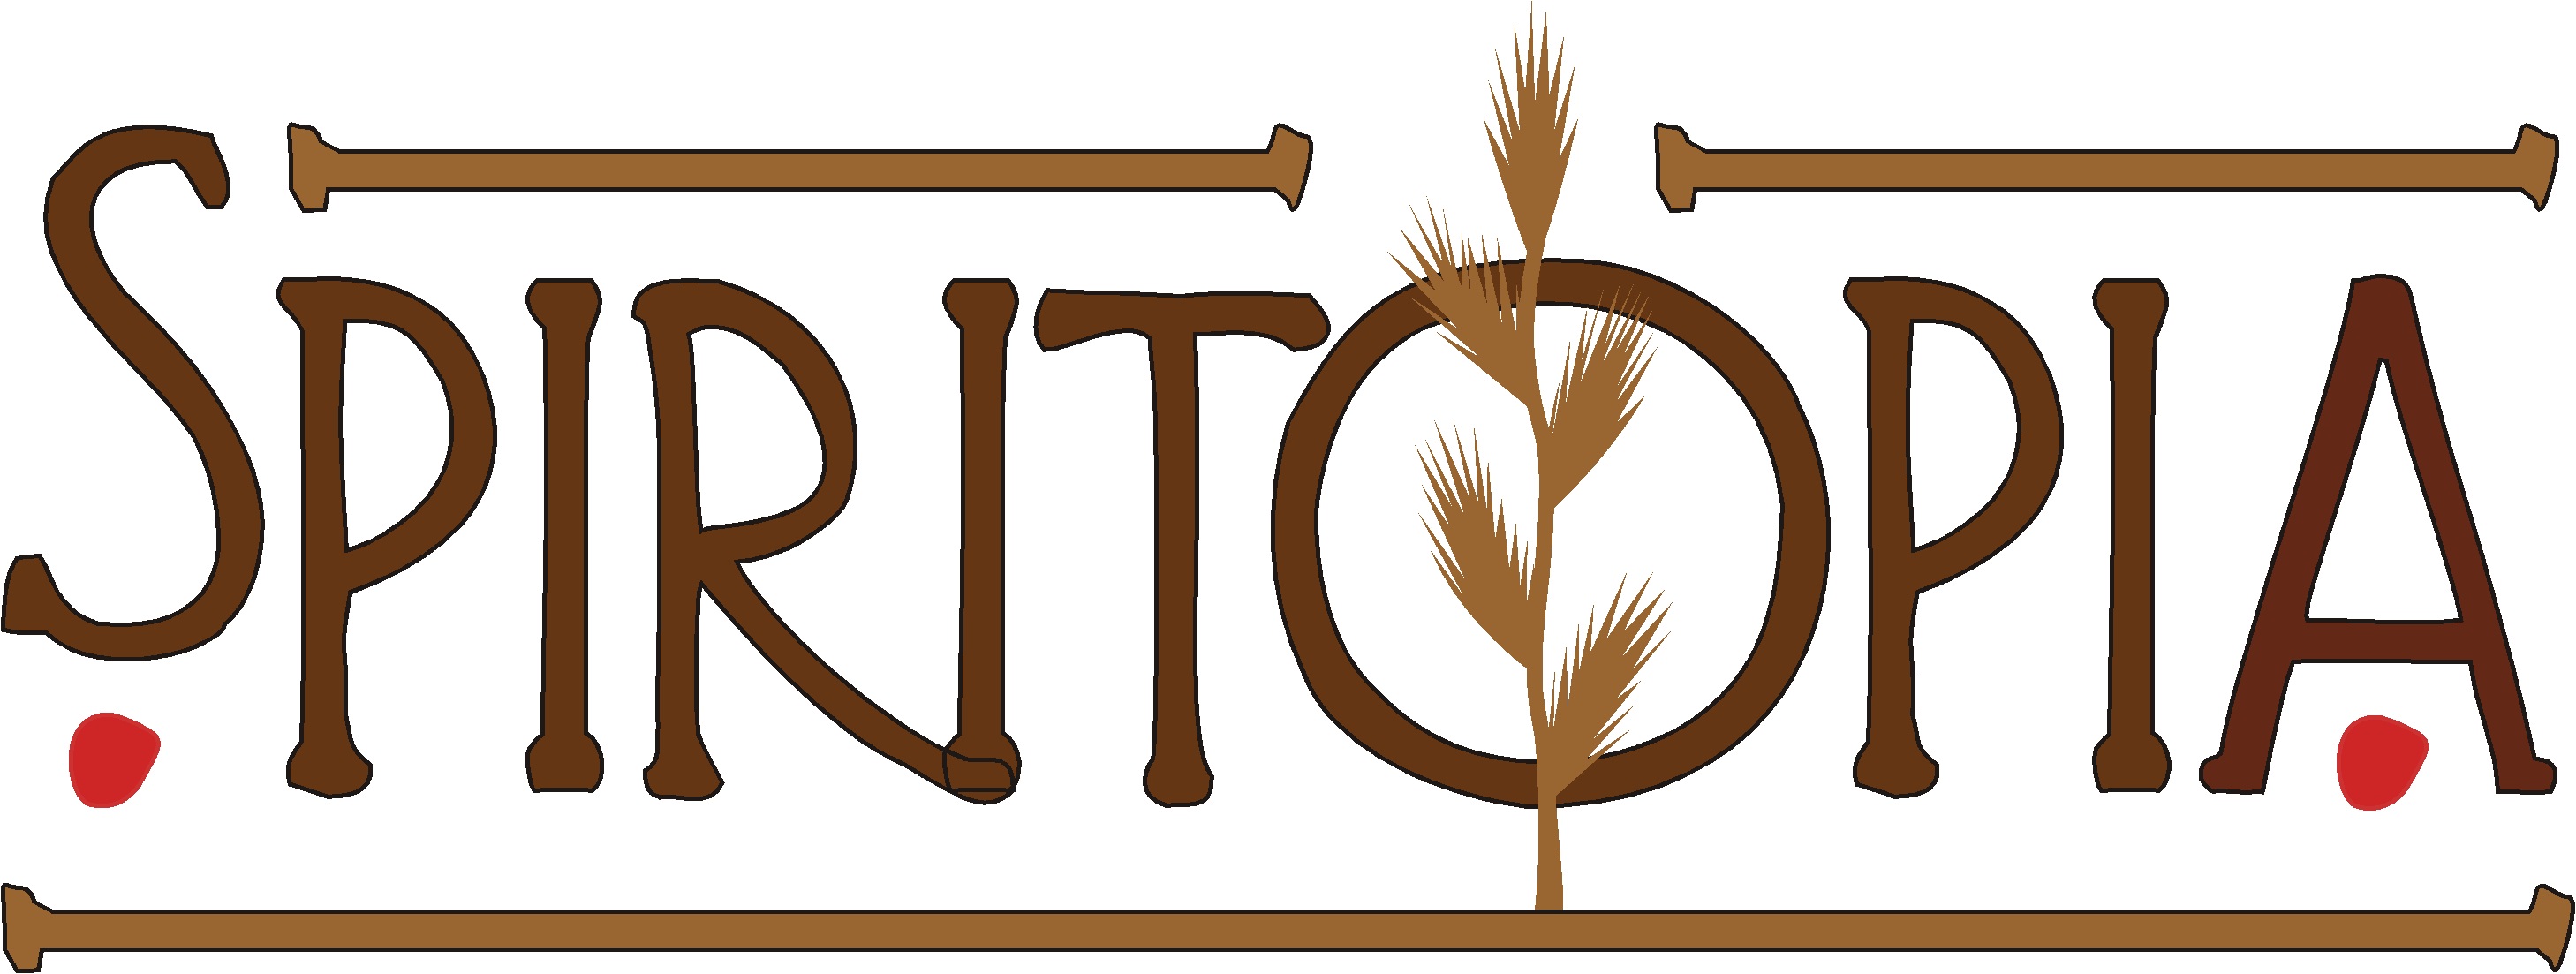 Spiritopia Logo